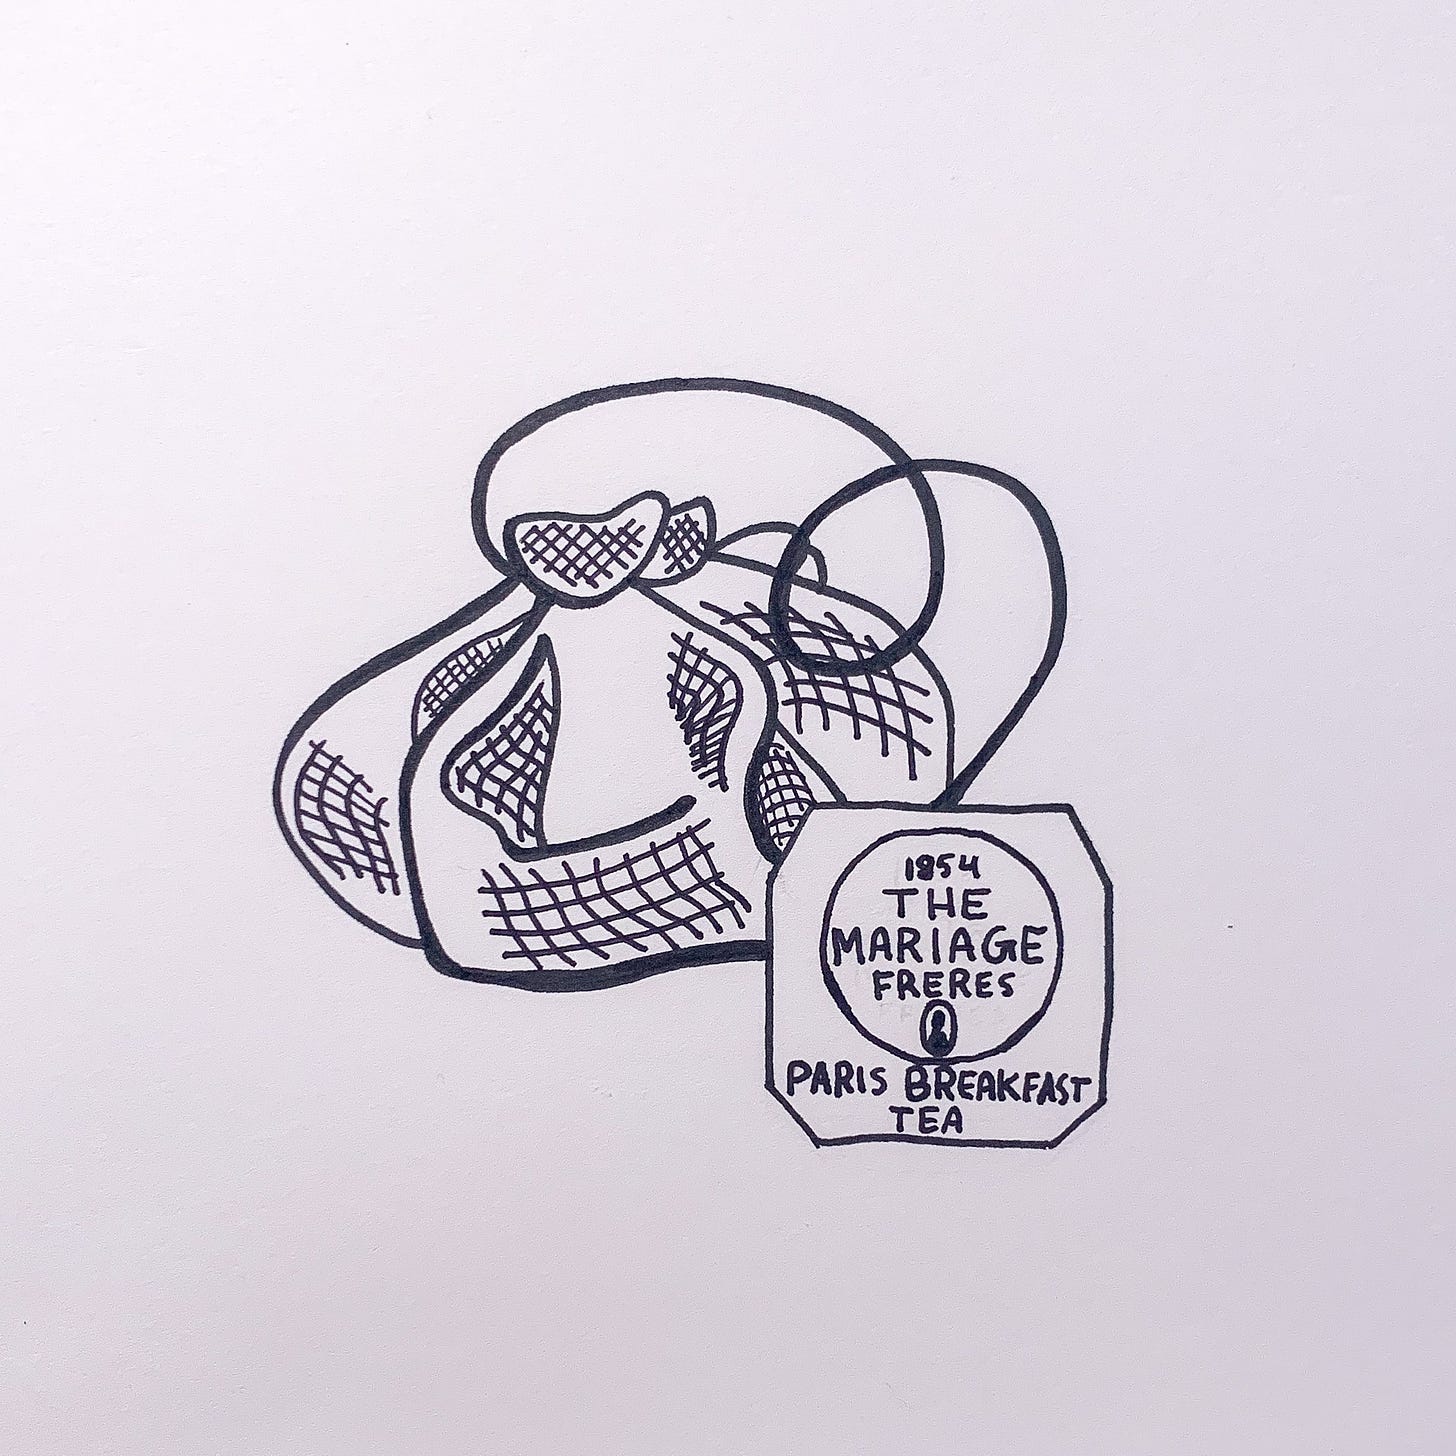 Black and white line drawing of Paris Breakfast Tea bag